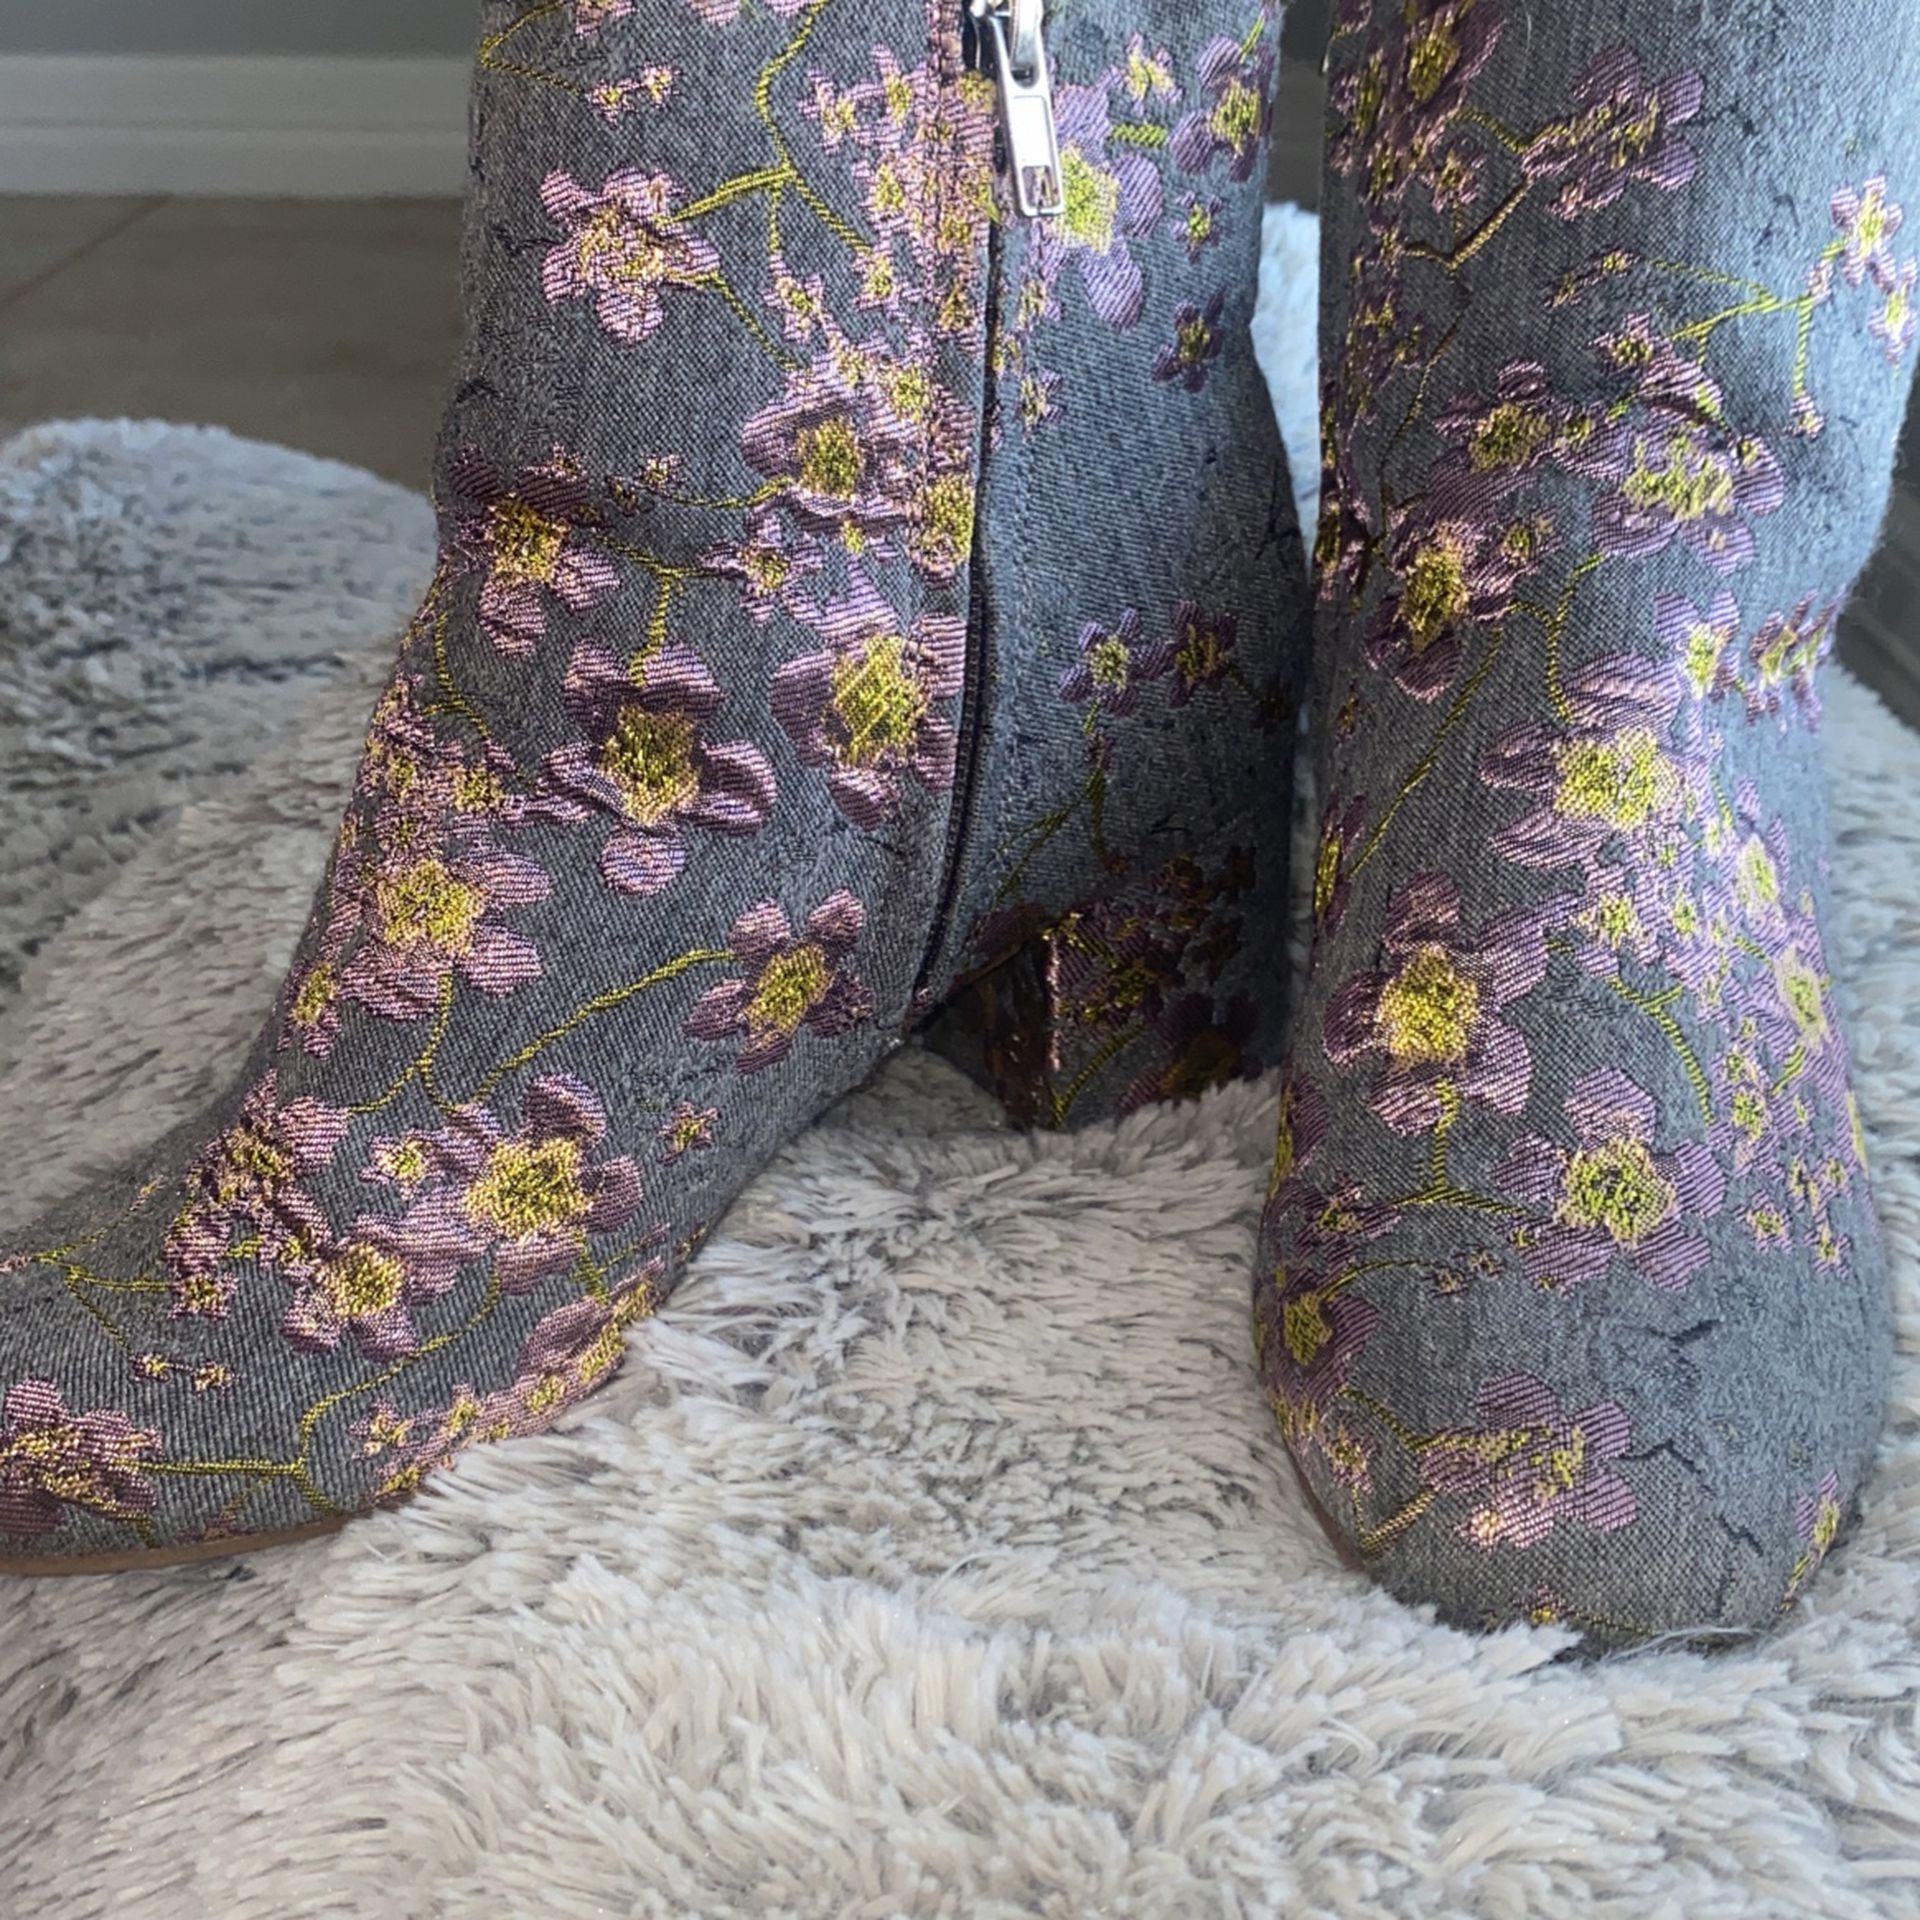 Vintage Floral Print Boots 